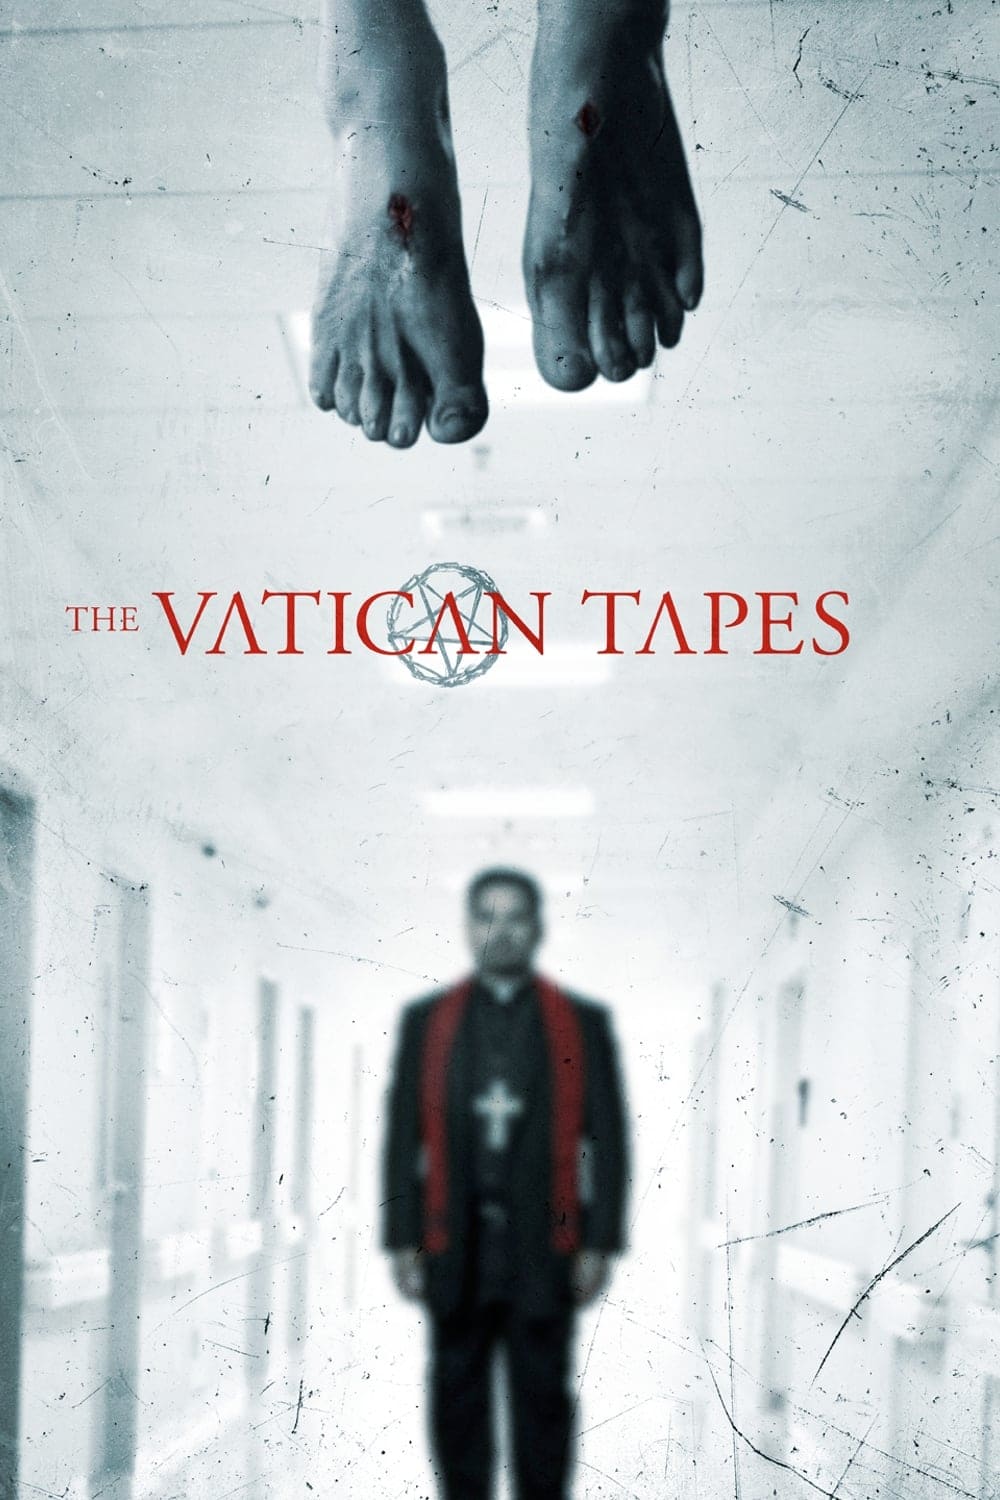 Lễ Trừ Tà (The Vatican Tapes) [2015]